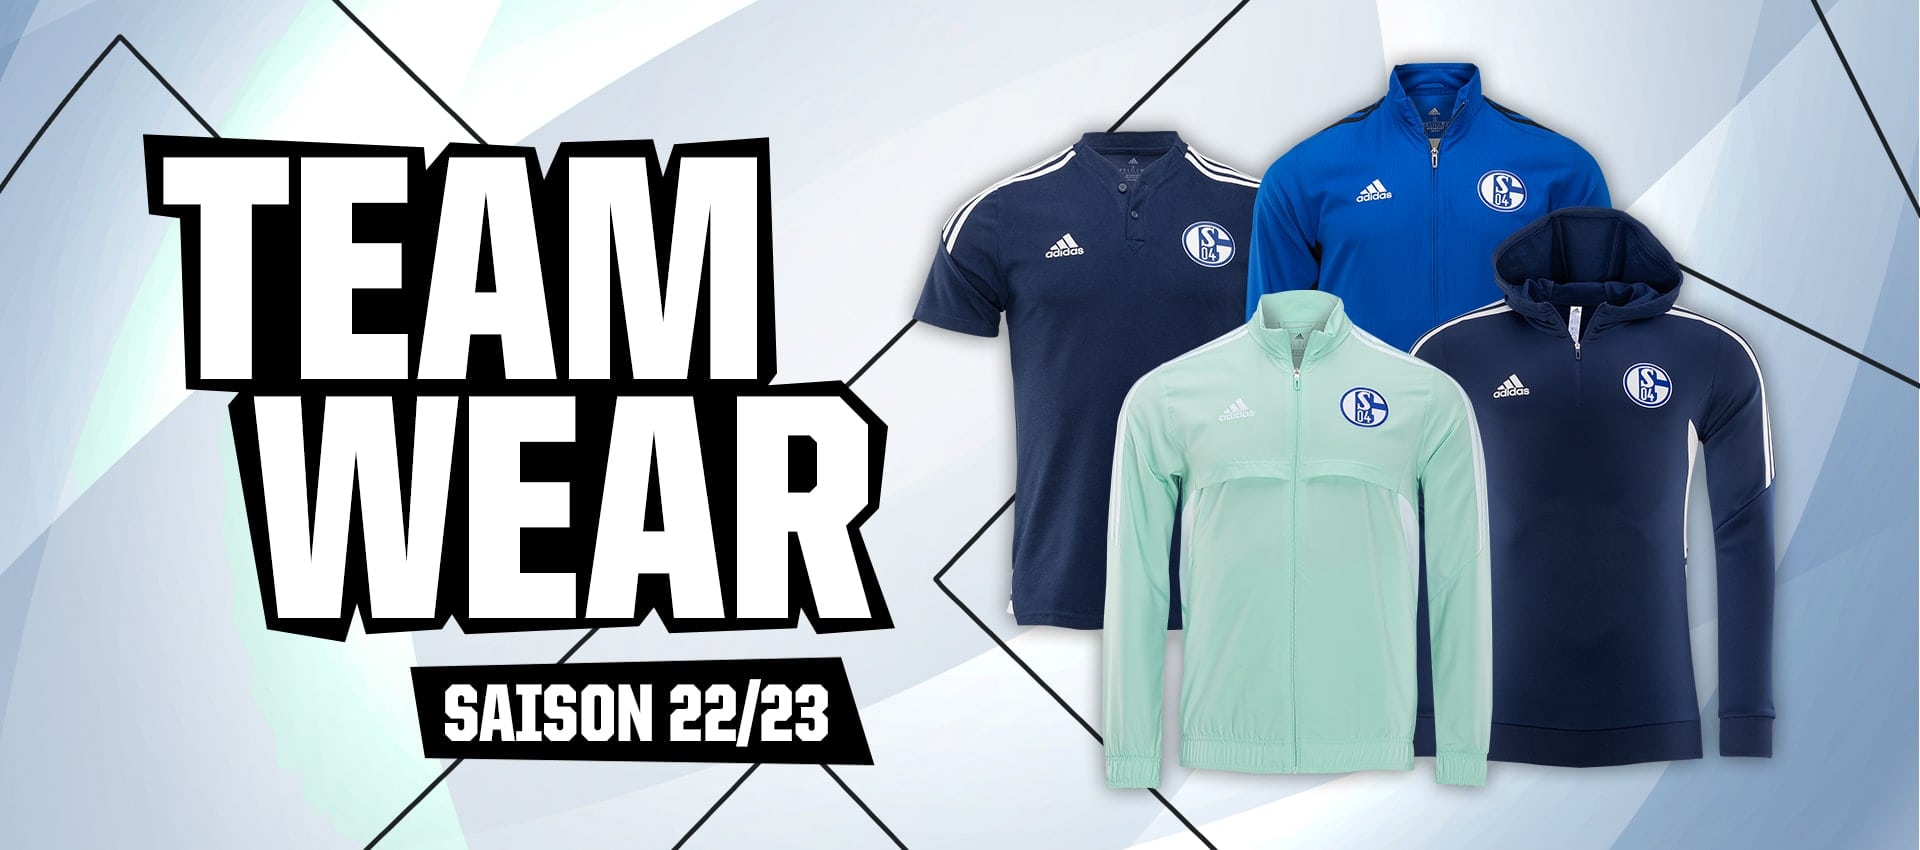 Teamwear adidas Schalke Training